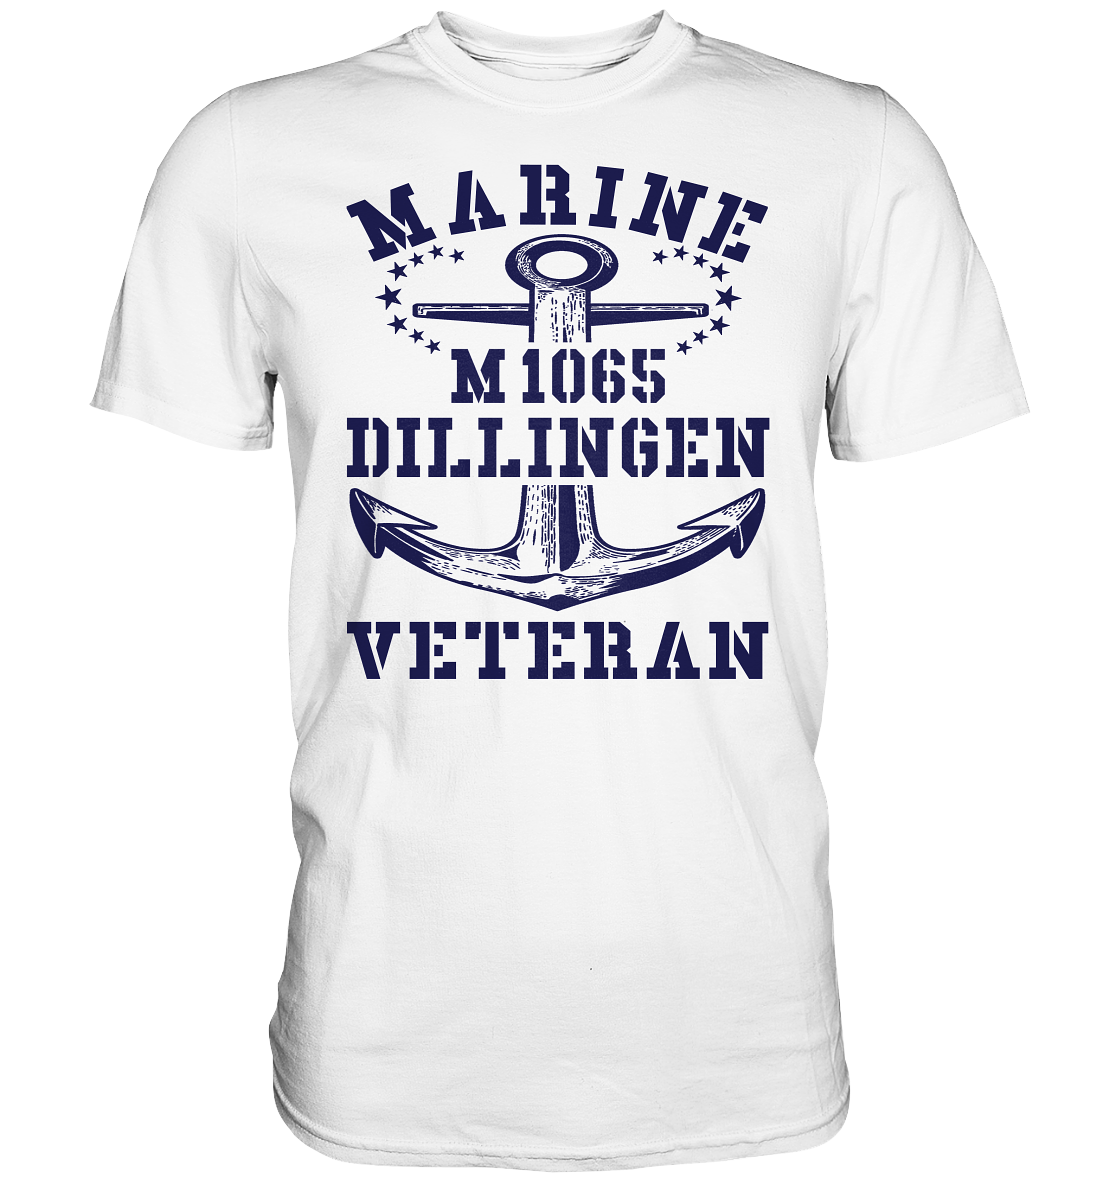 Mij.-Boot M1065 DILLINGEN Marine Veteran  - Premium Shirt